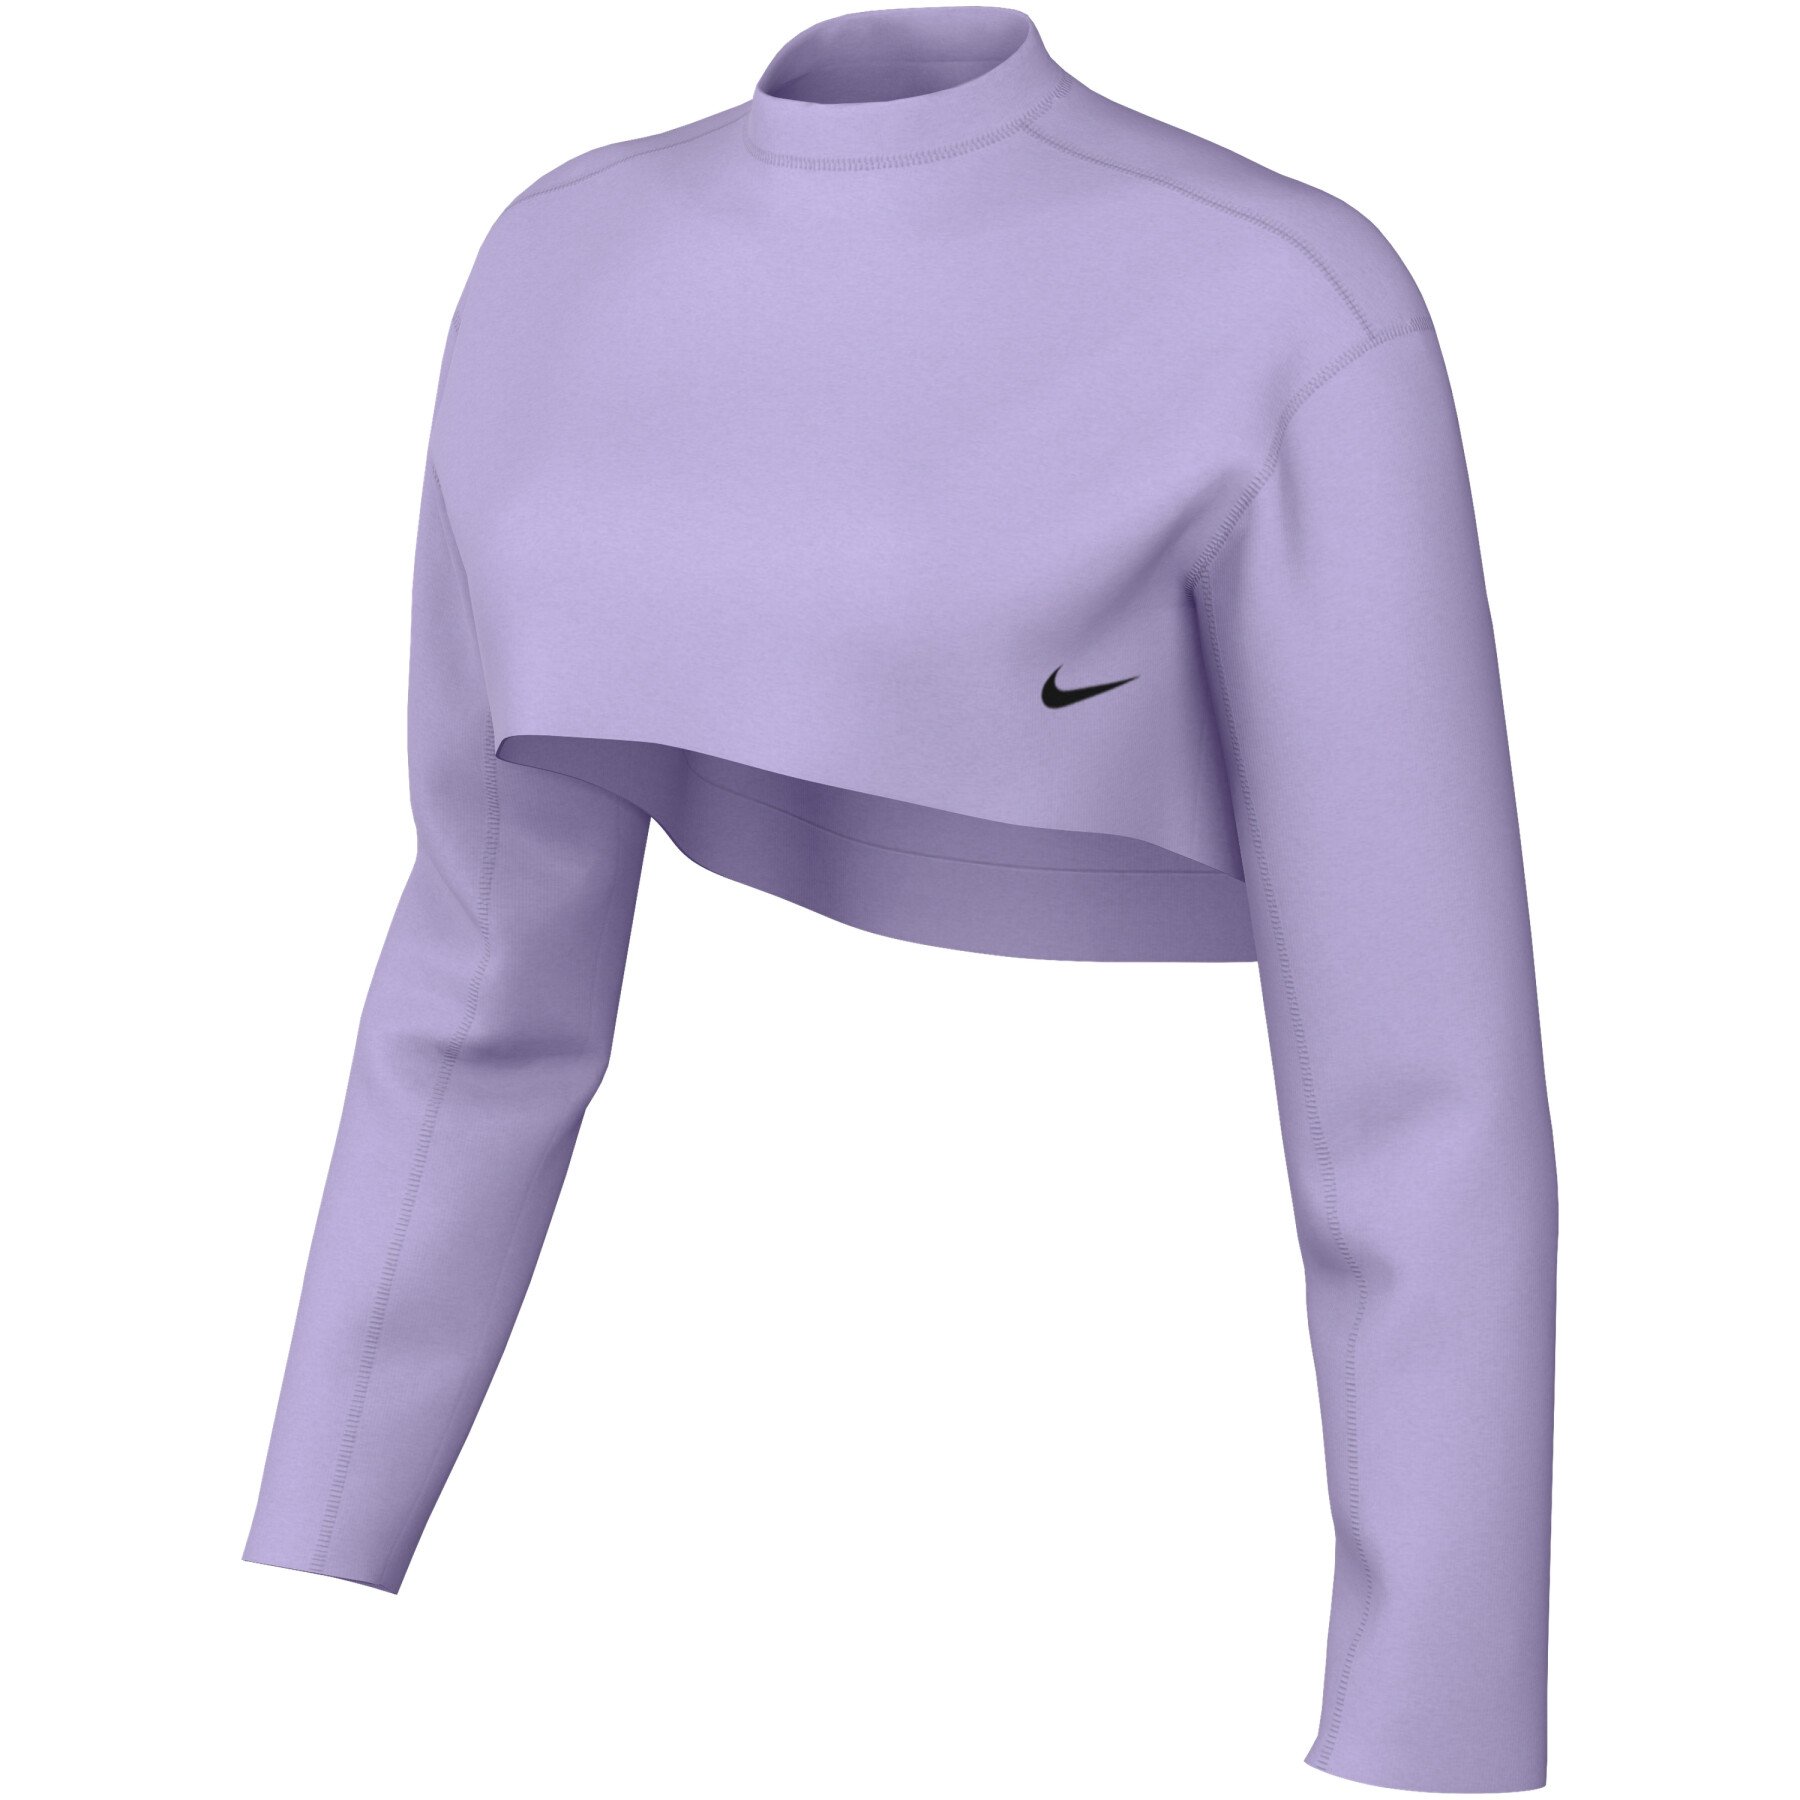 Women's oversize long-sleeve jersey Nike Prima FutureMove